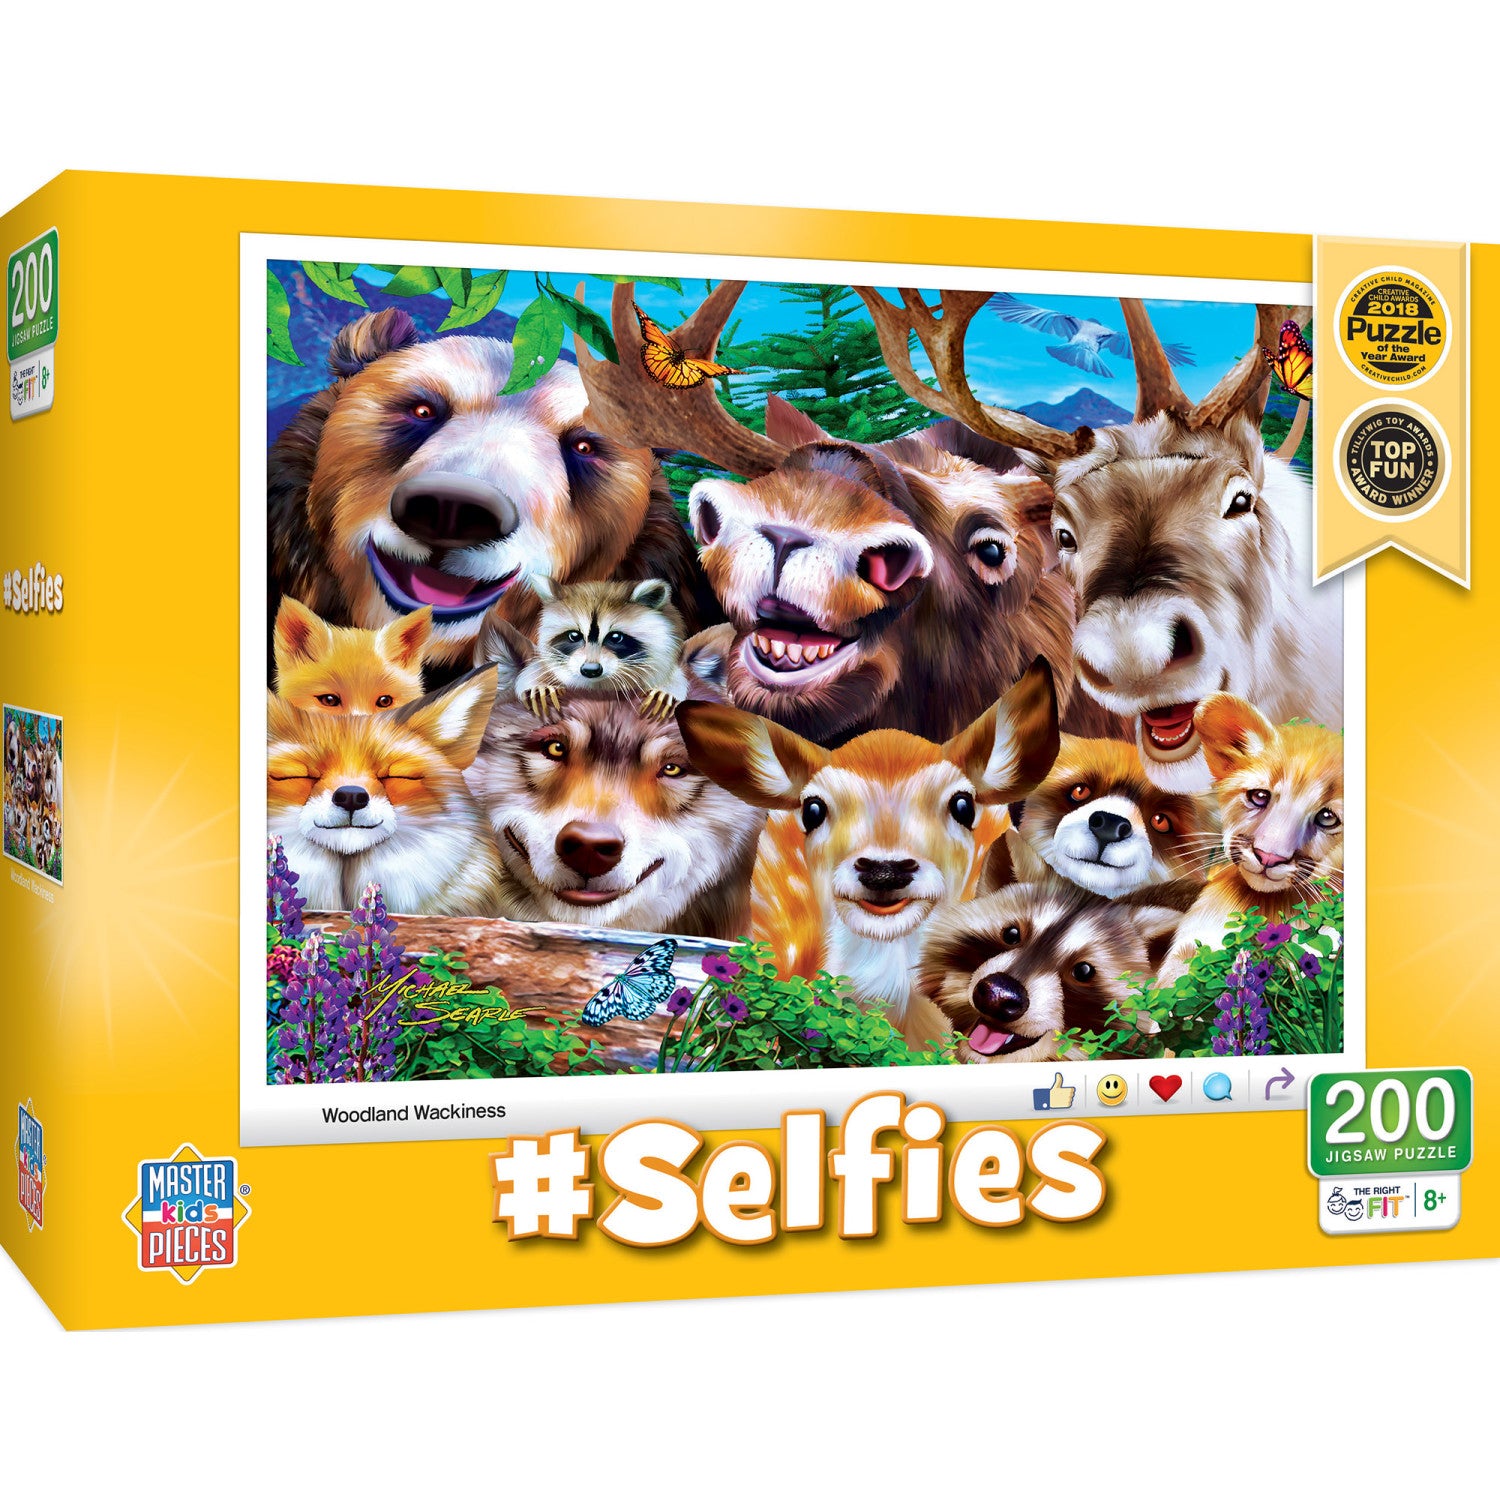 Selfies - Woodland Wackiness 200 Piece Puzzle